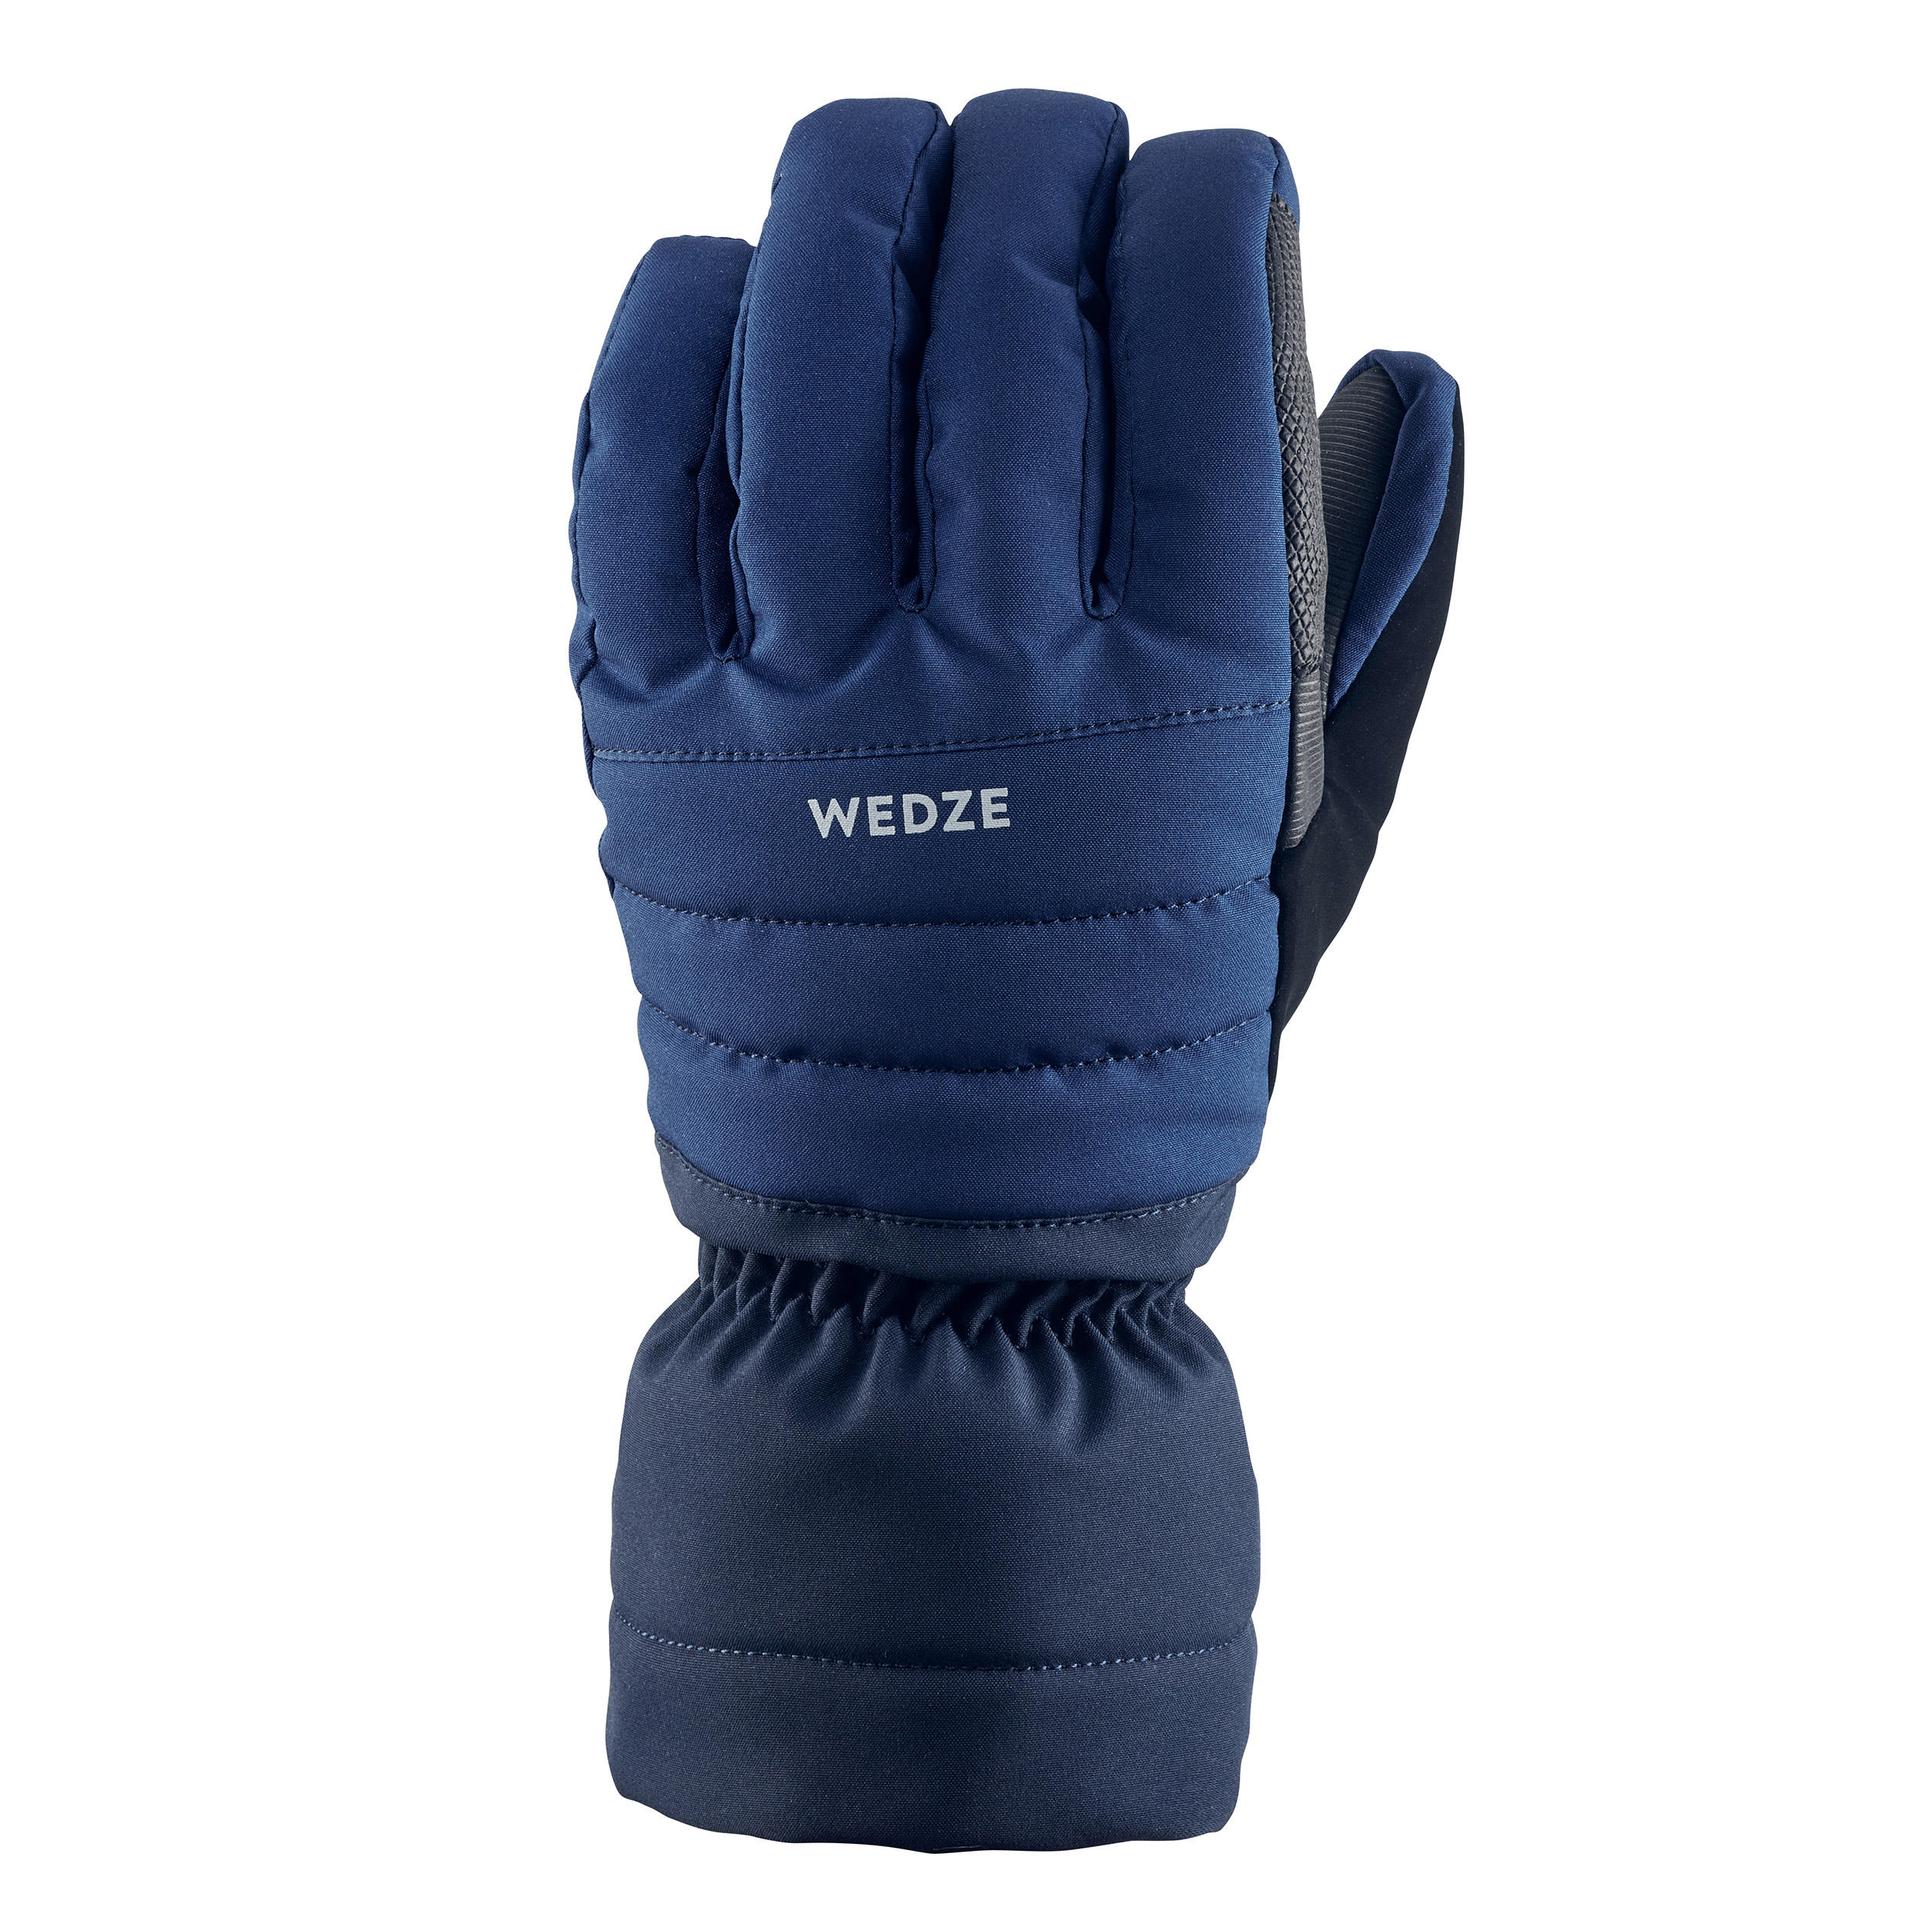 adult downhill ski gloves 500 - navy blue